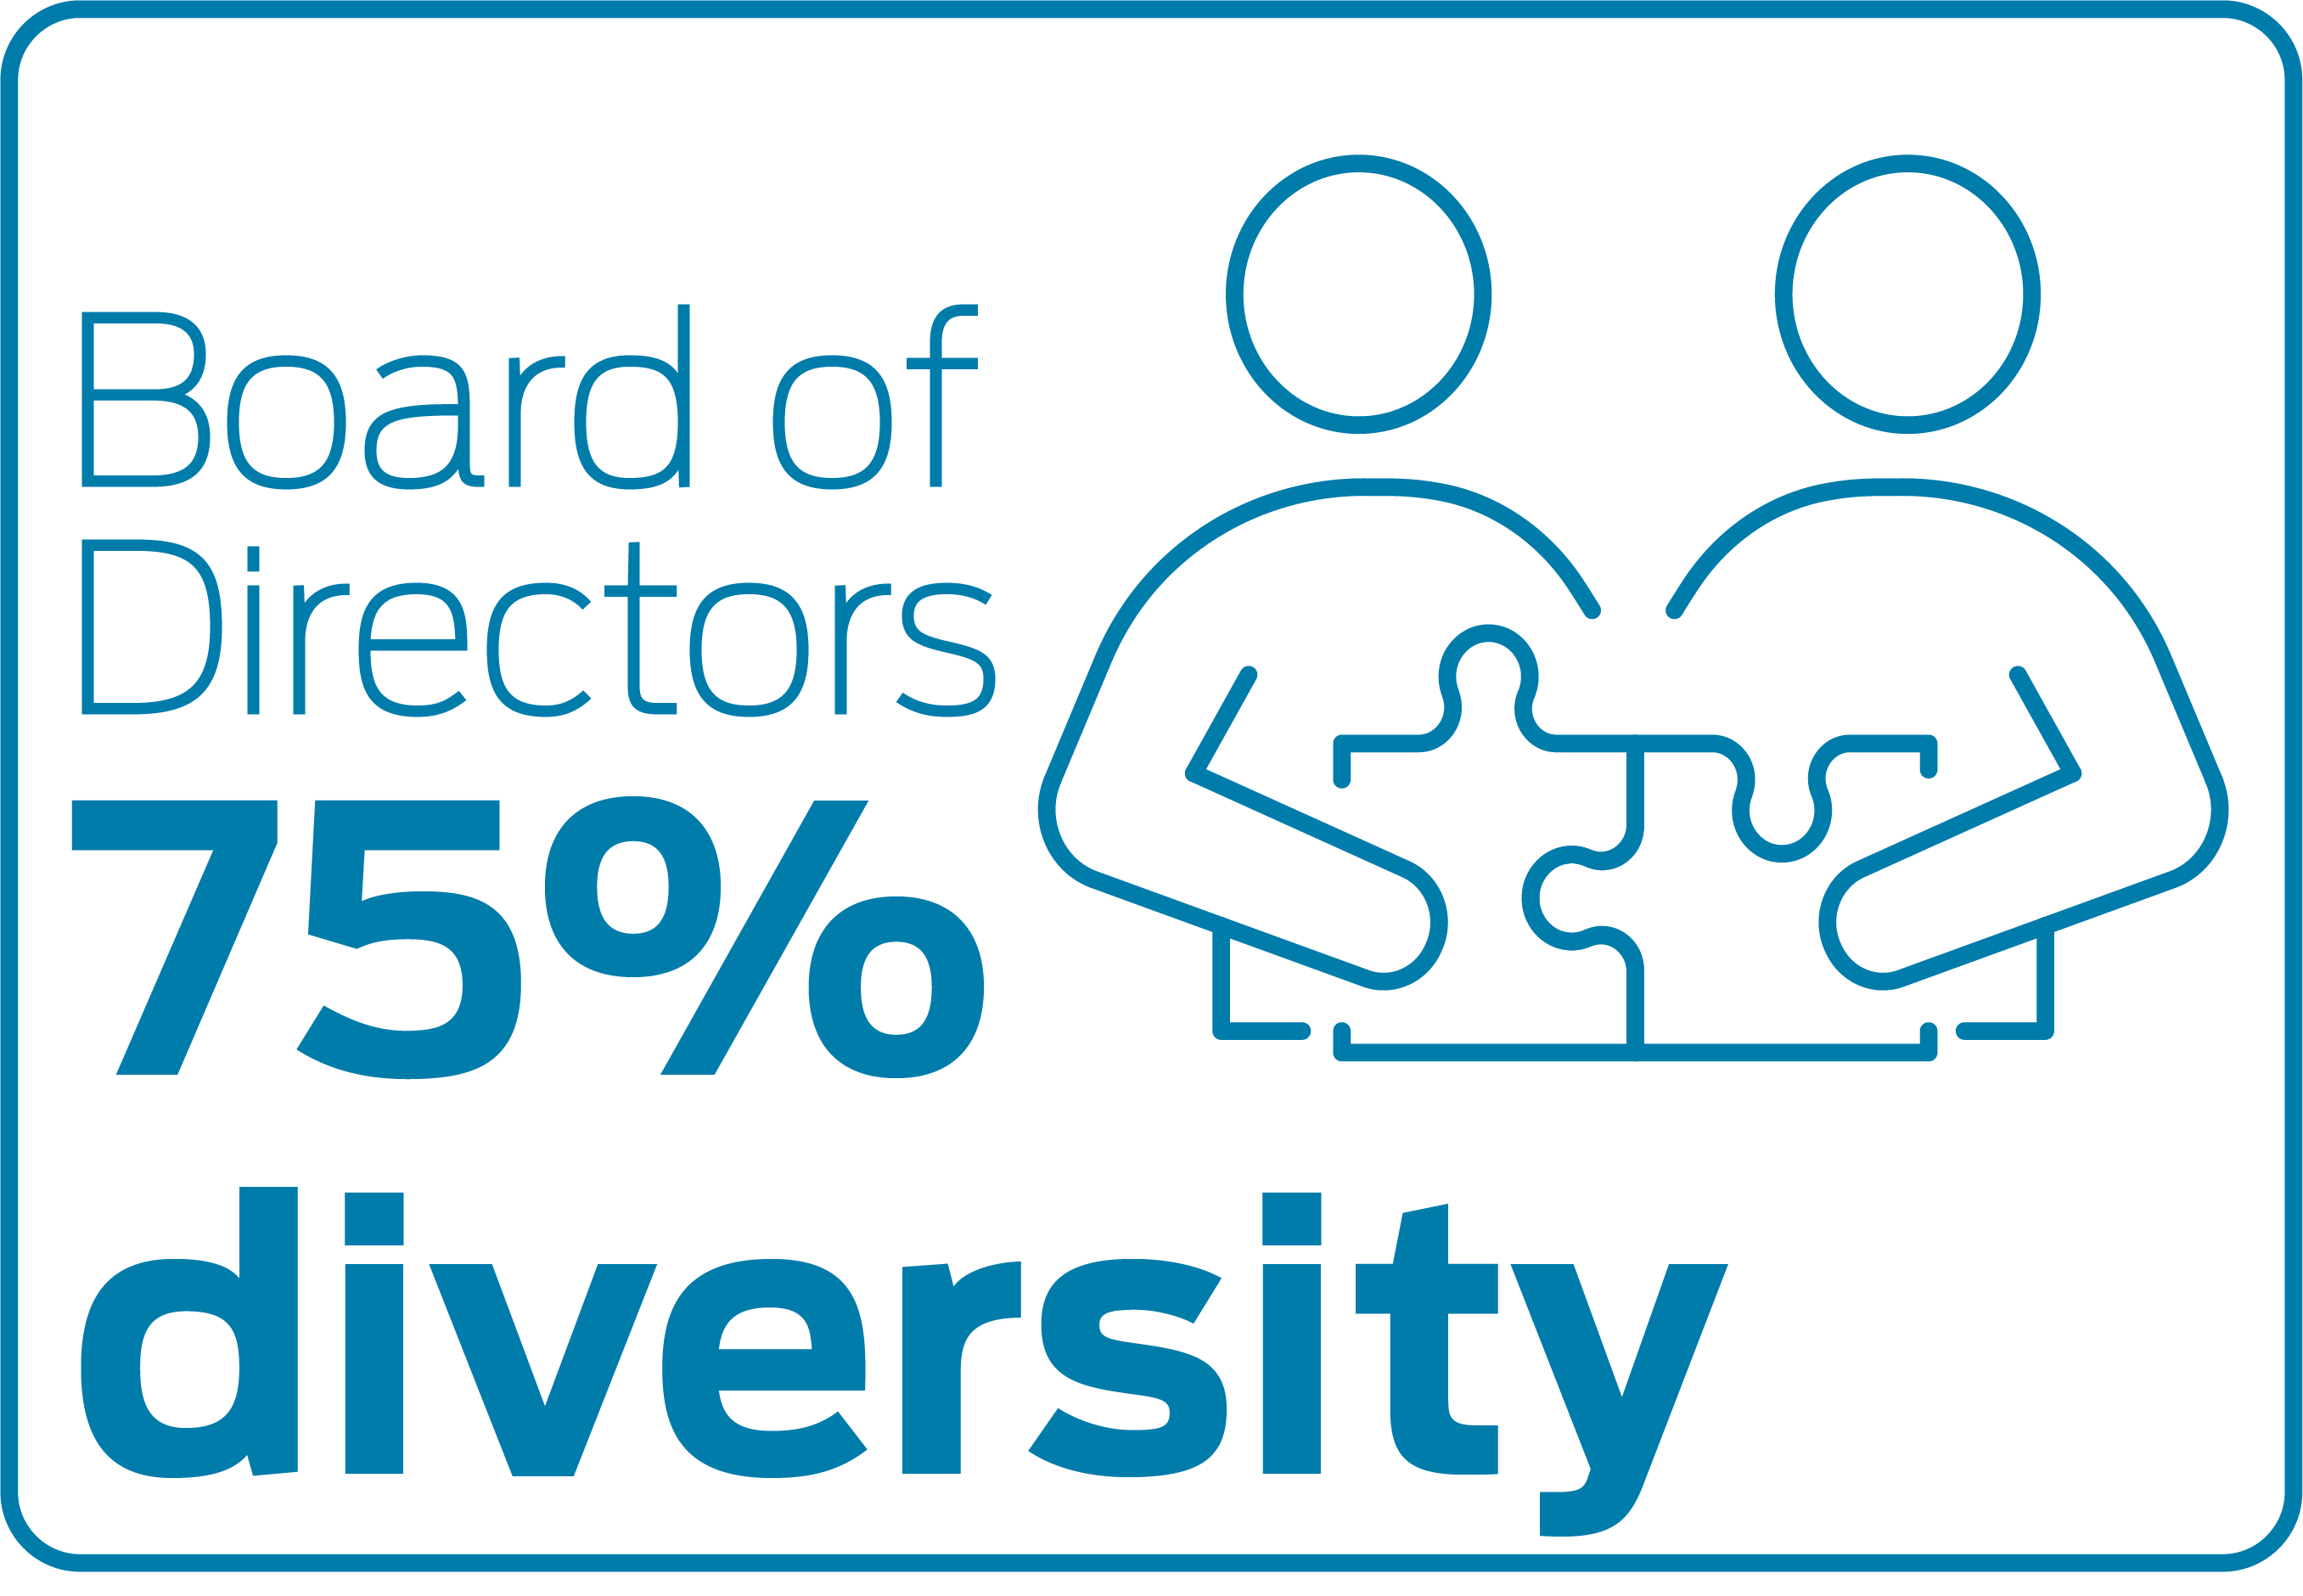 Board of Directors 75% diversity